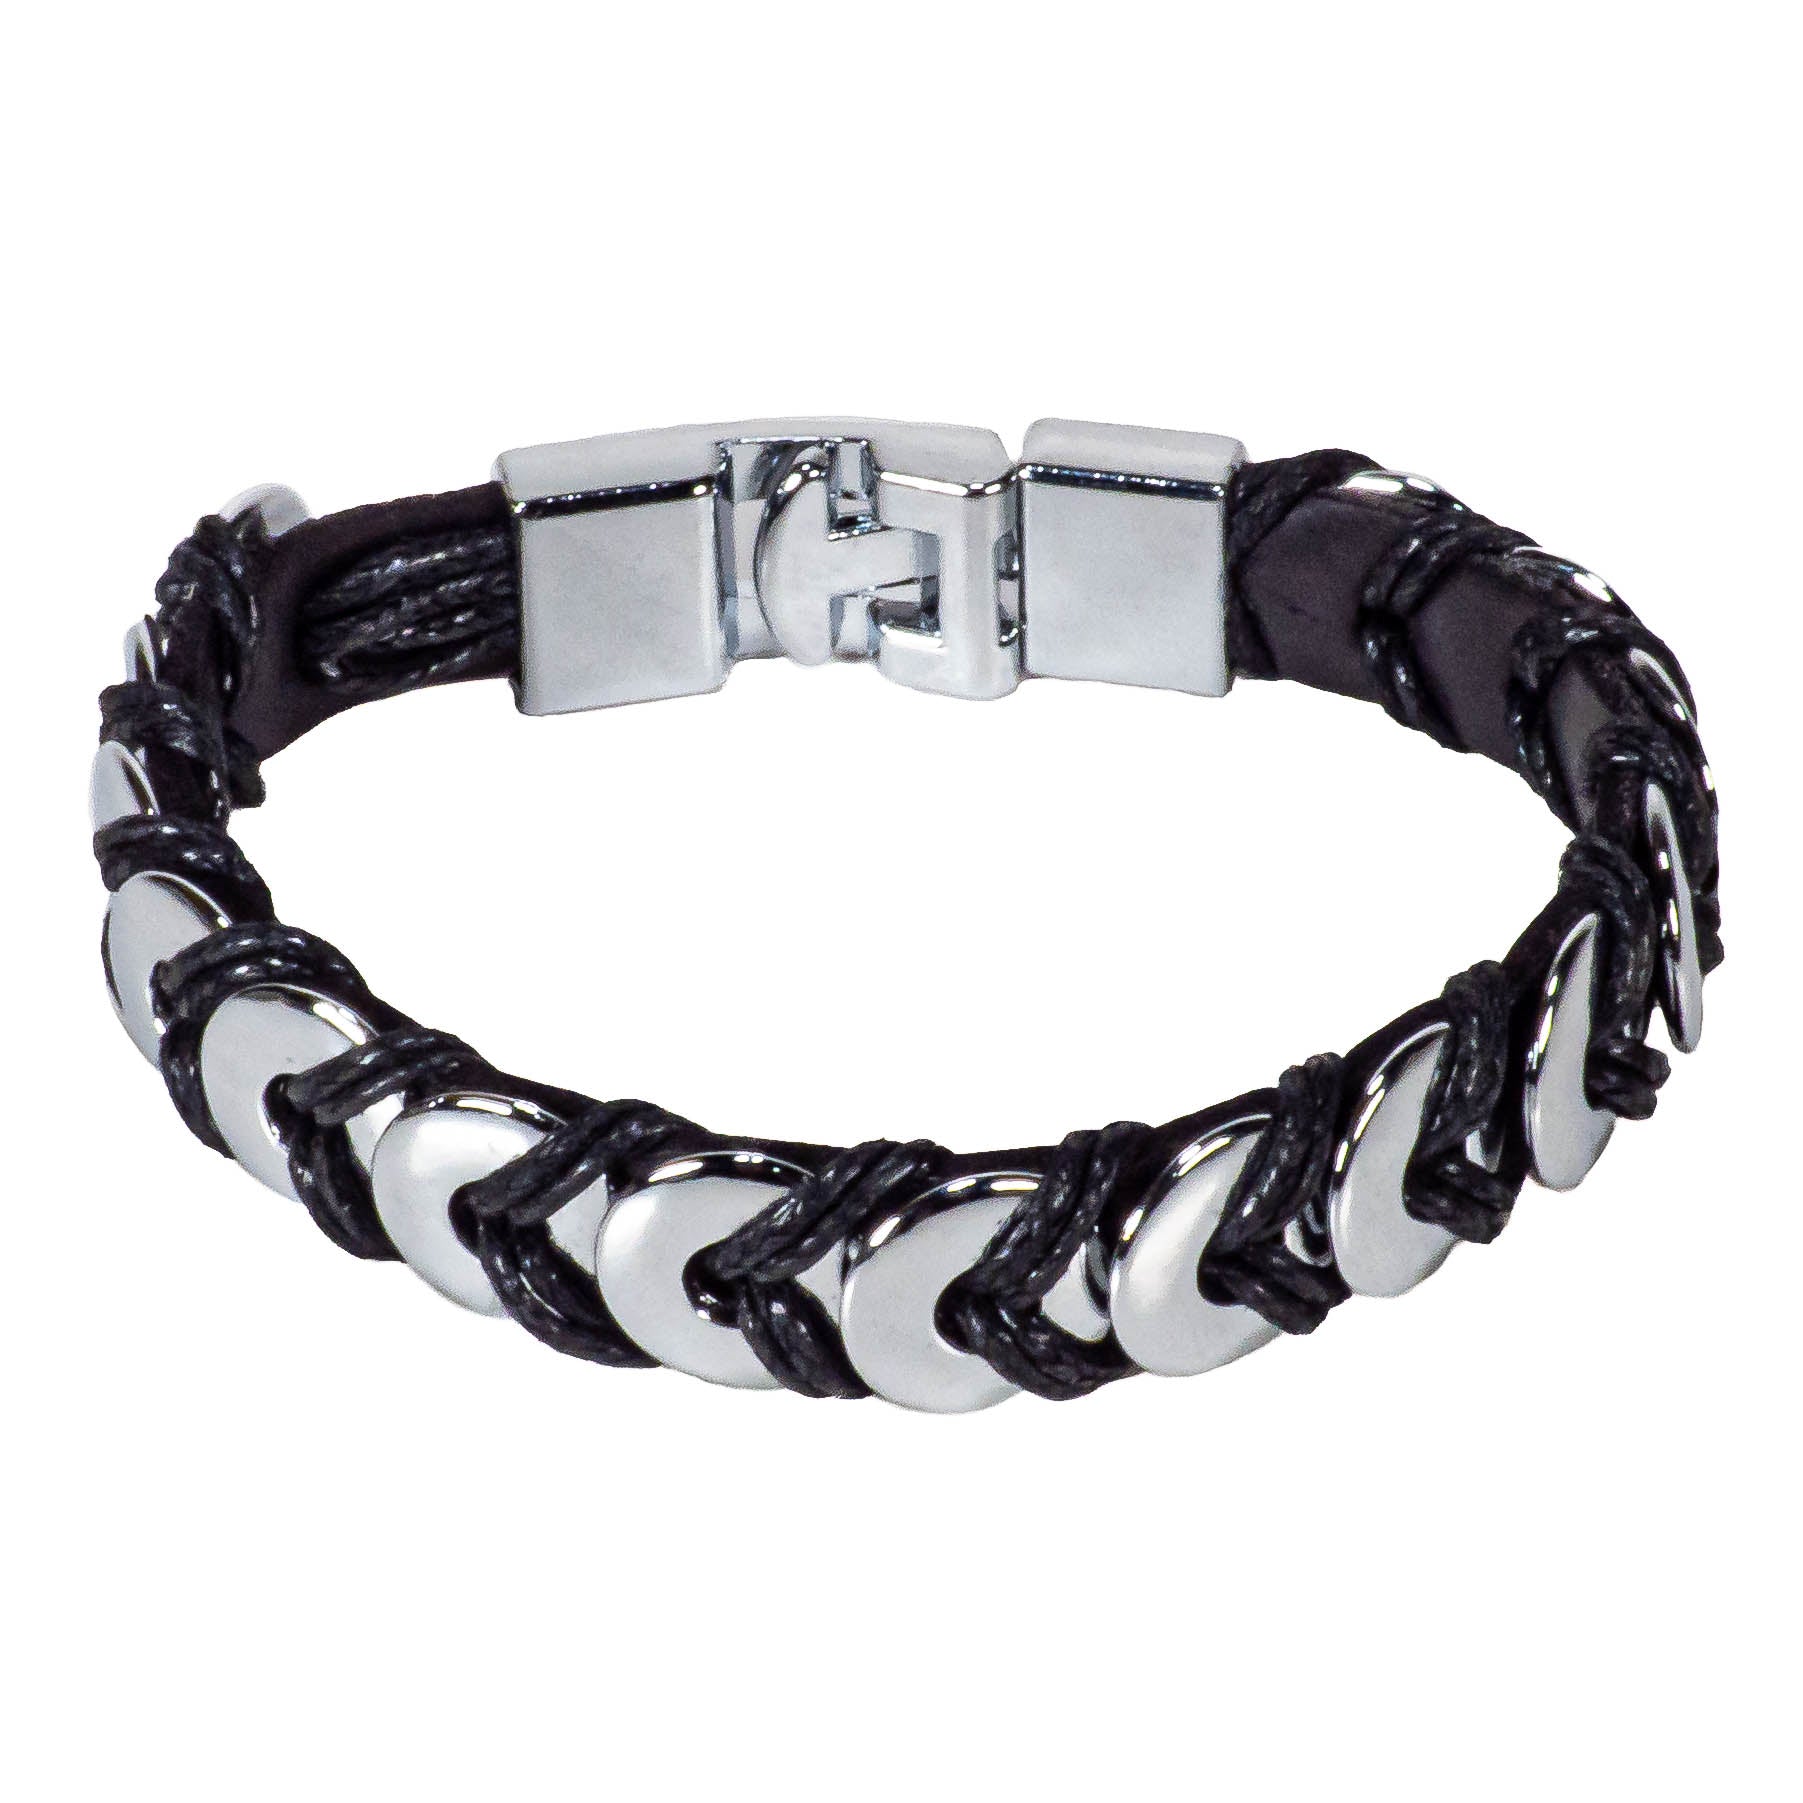 Black Leather Bracelet with Chrome Discs Design